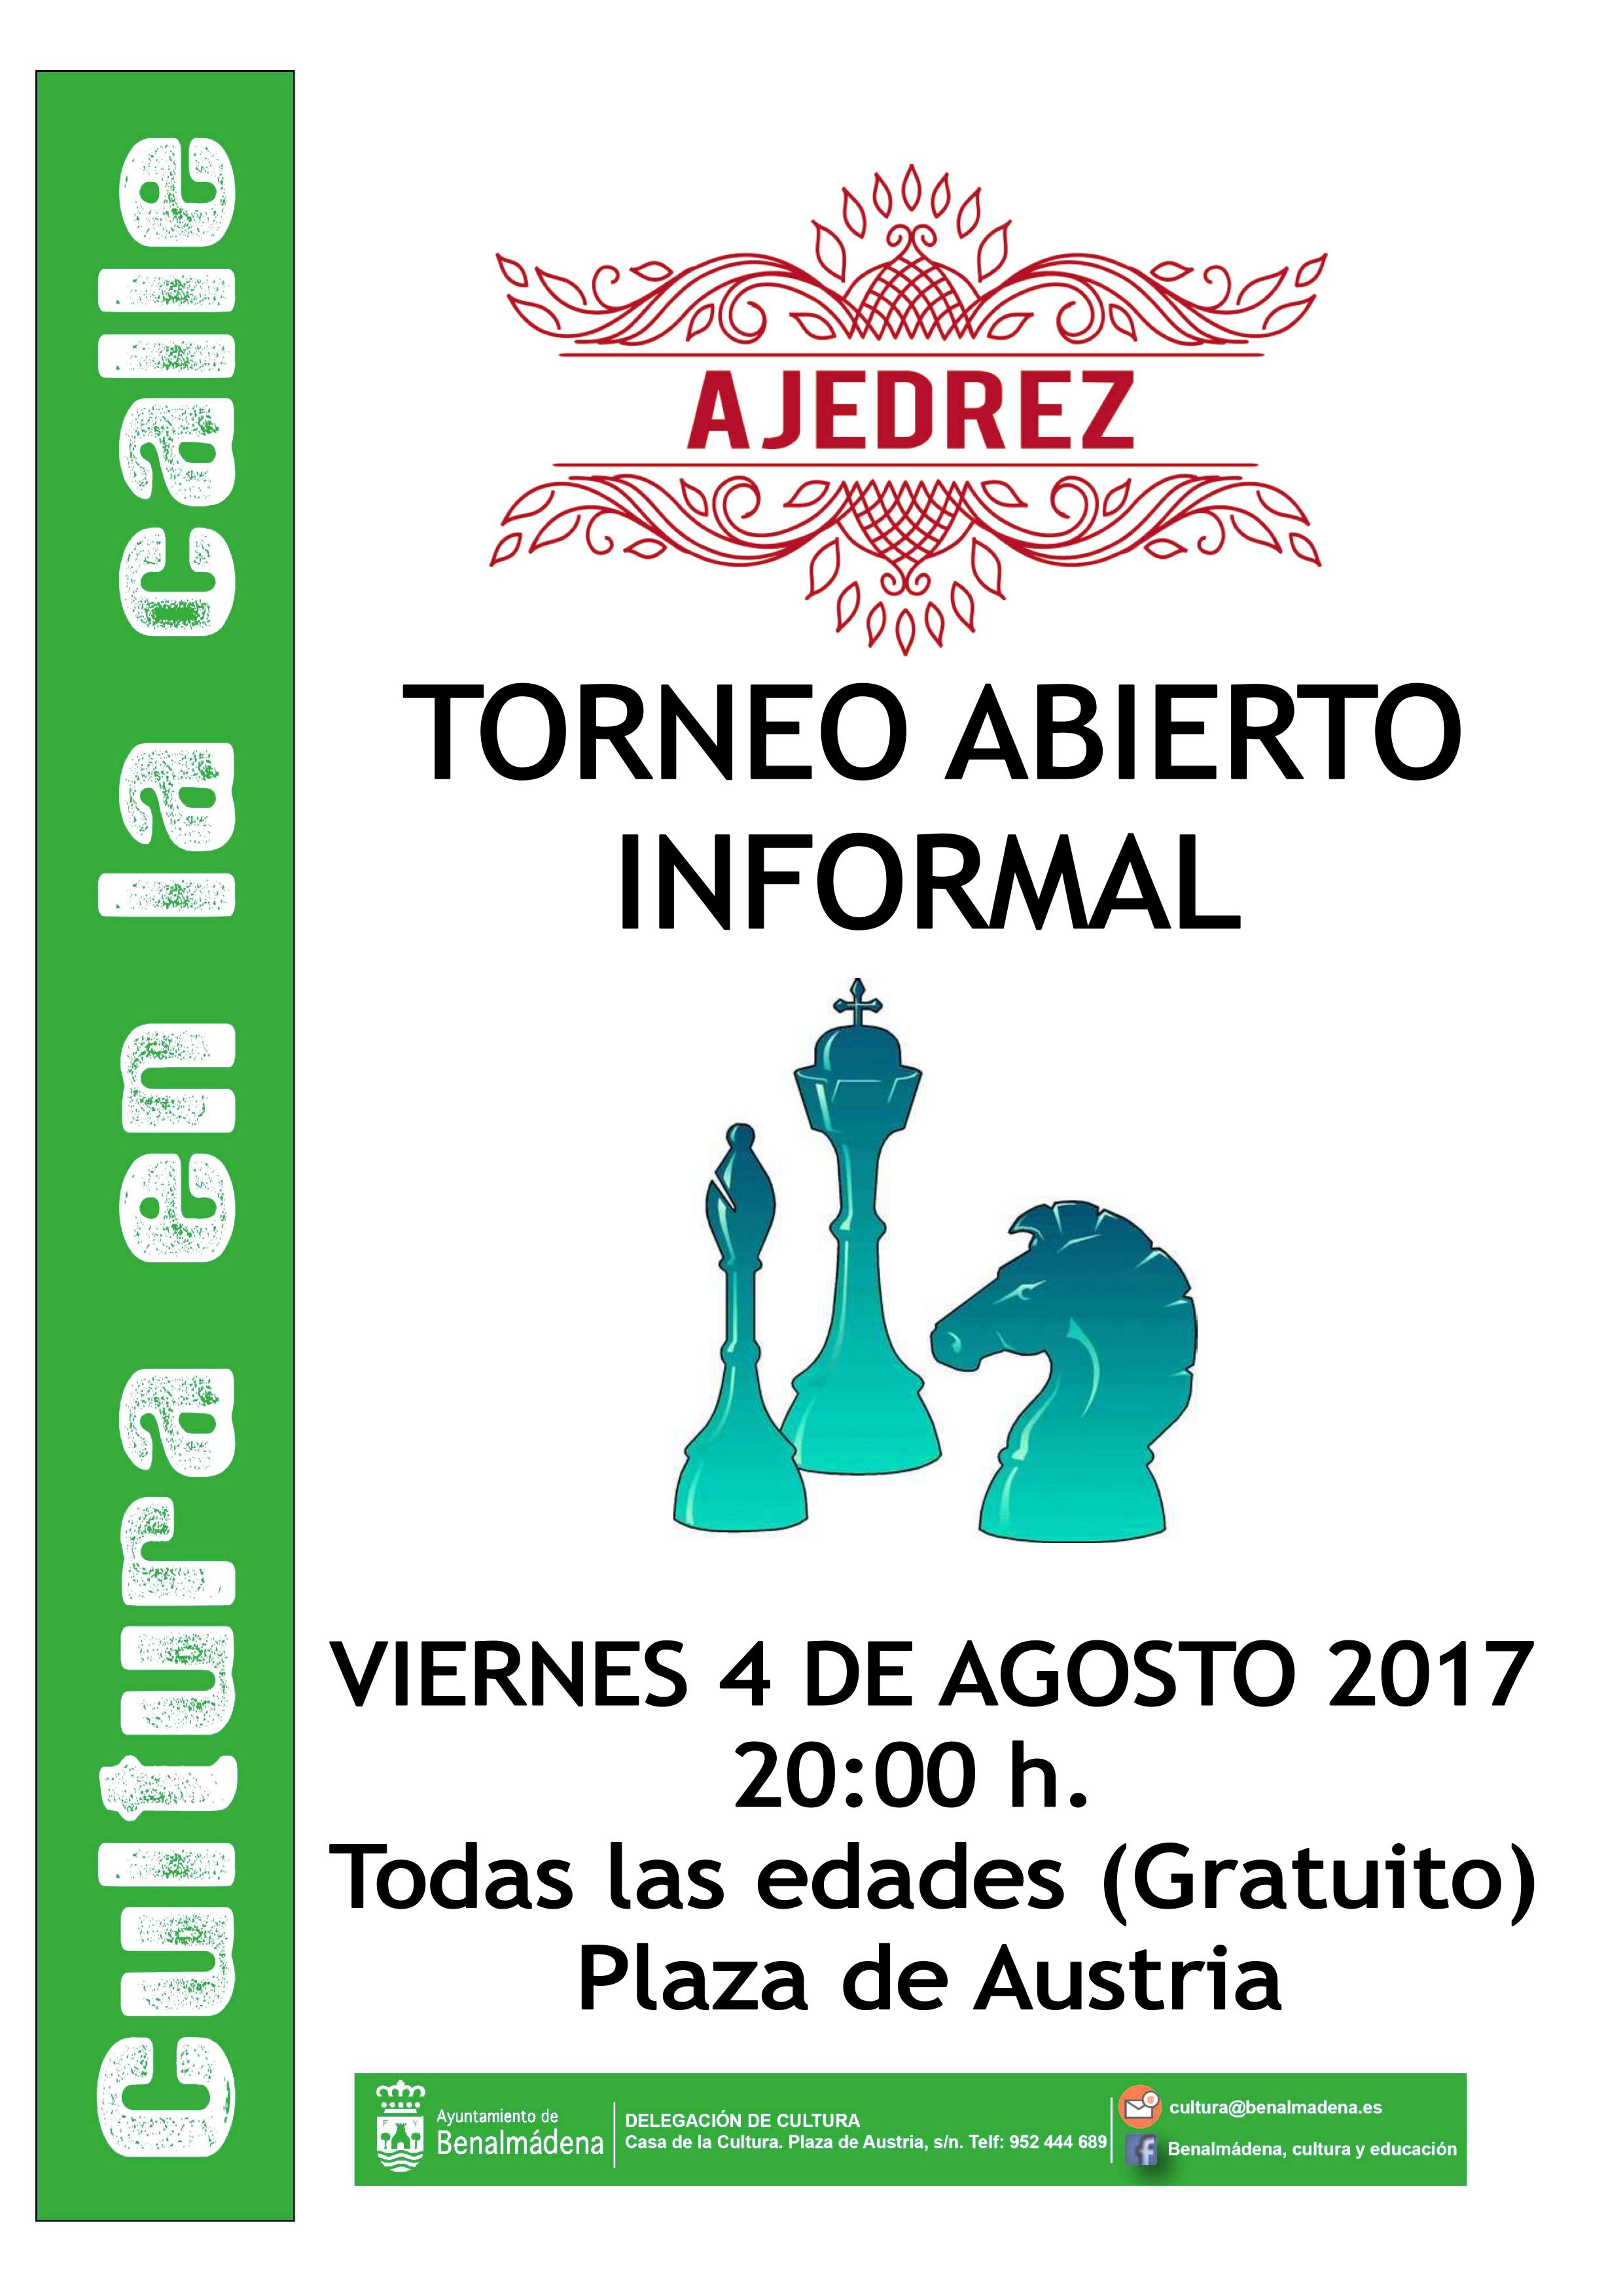 Torneo Abierto Informal de Ajedrez